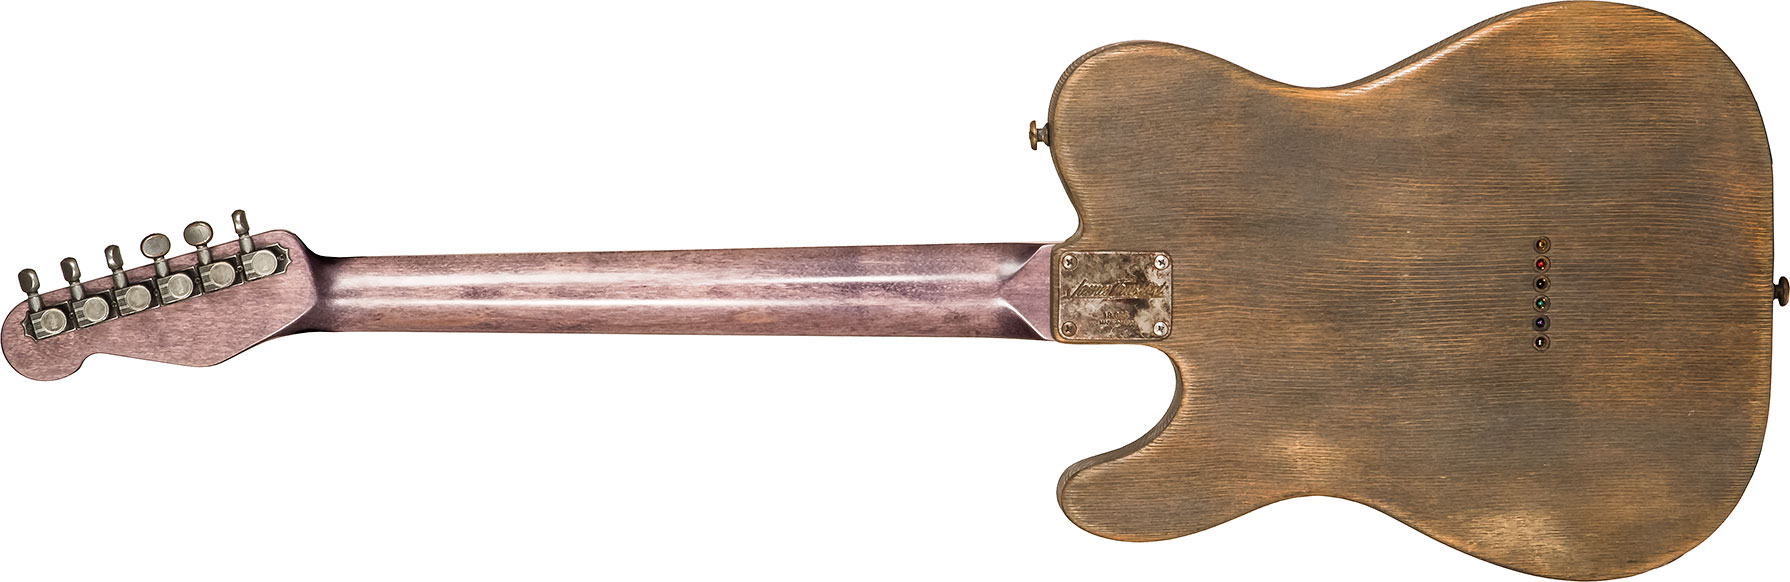 James Trussart Steelguard Caster Sugar Pine Sh Eb #18035 - Rust O Matic Gator Grey Driftwood - Televorm elektrische gitaar - Variation 1